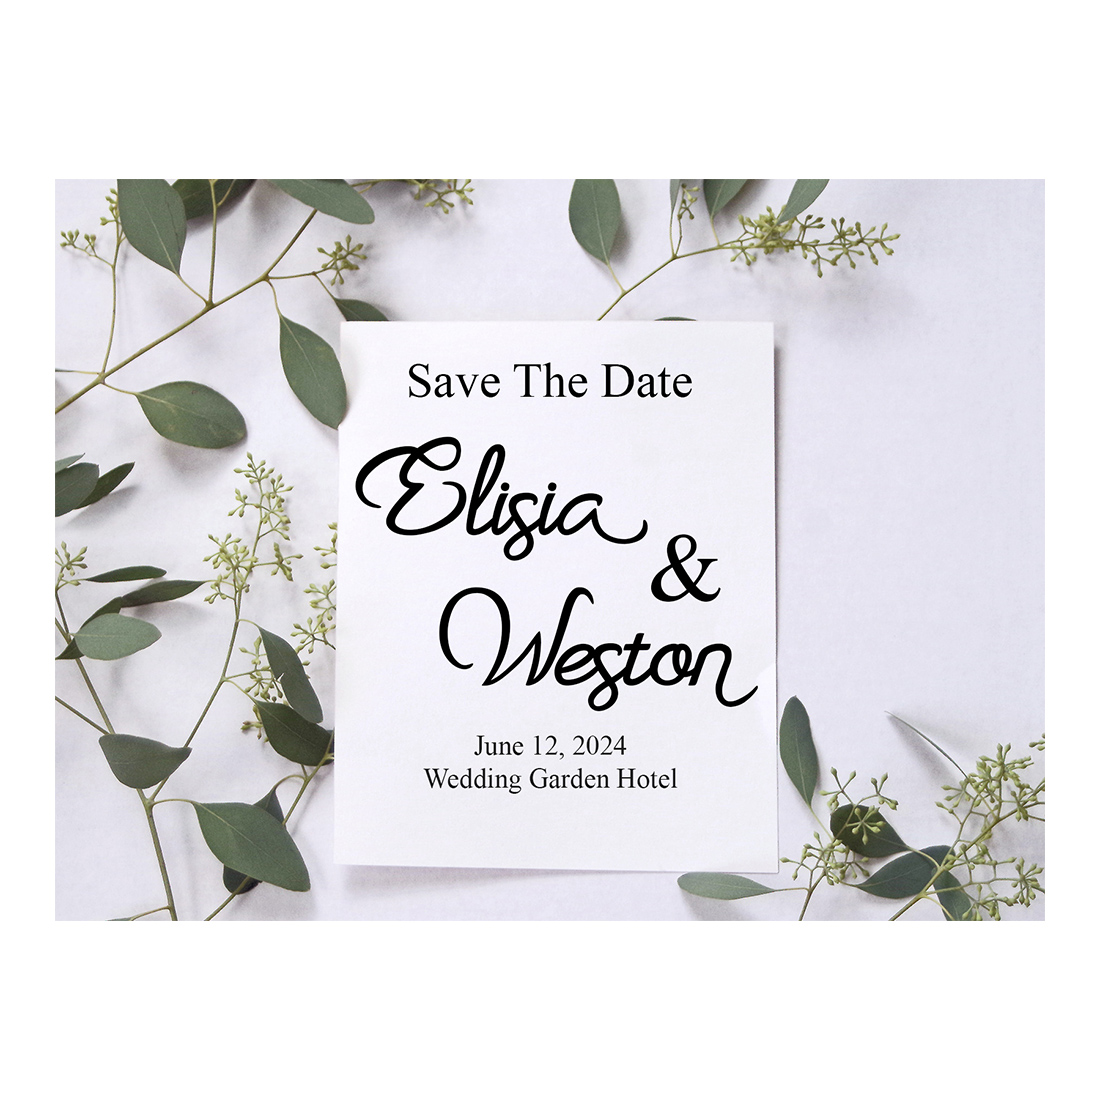 Wedding invitation using Vinsield Calligraphy Font.